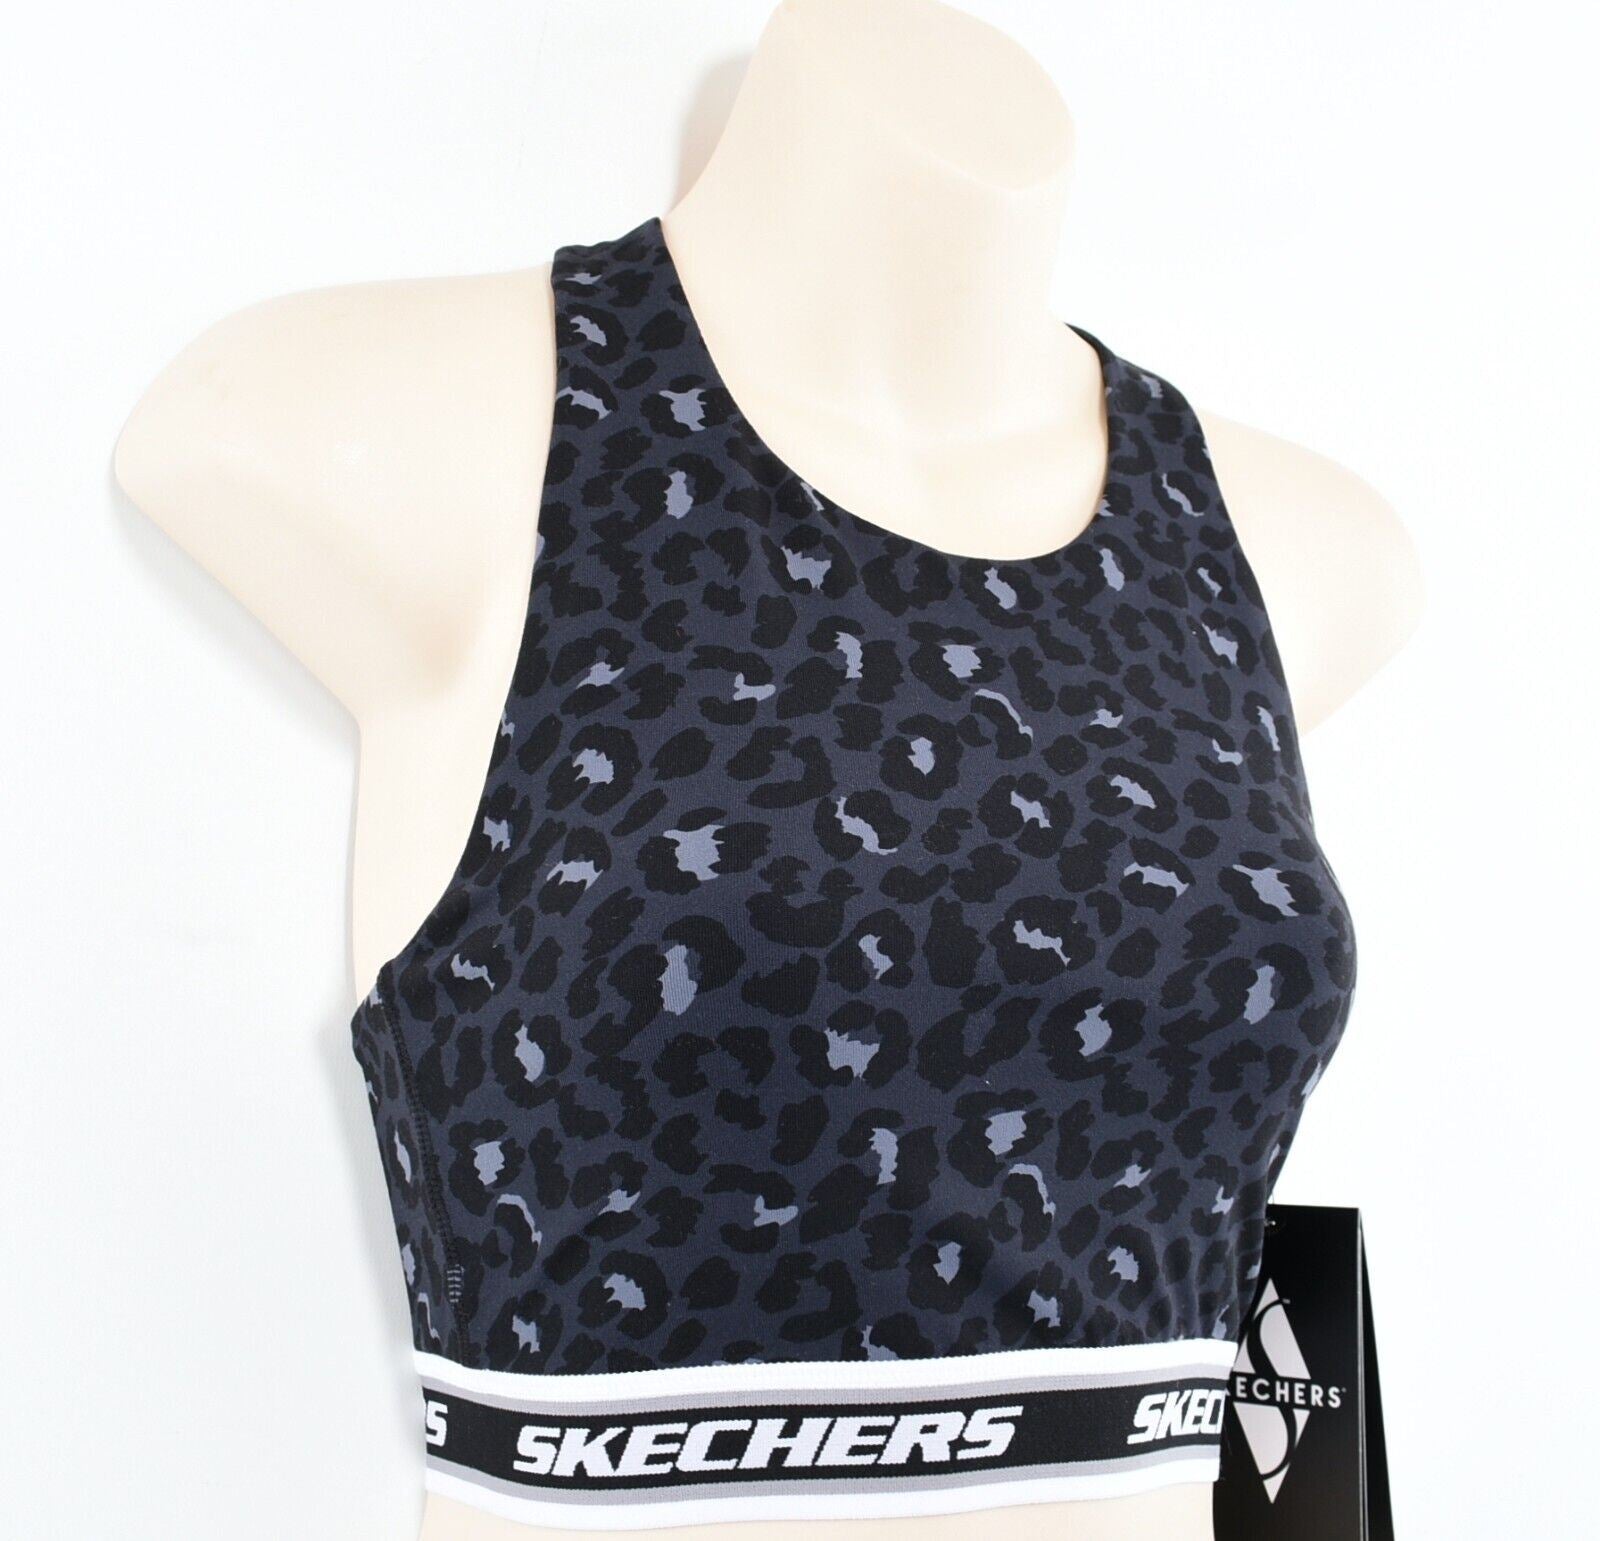 SKECHERS Women's GO FLEX Workout Bra Top, Black/Animal Print, size L /UK 14